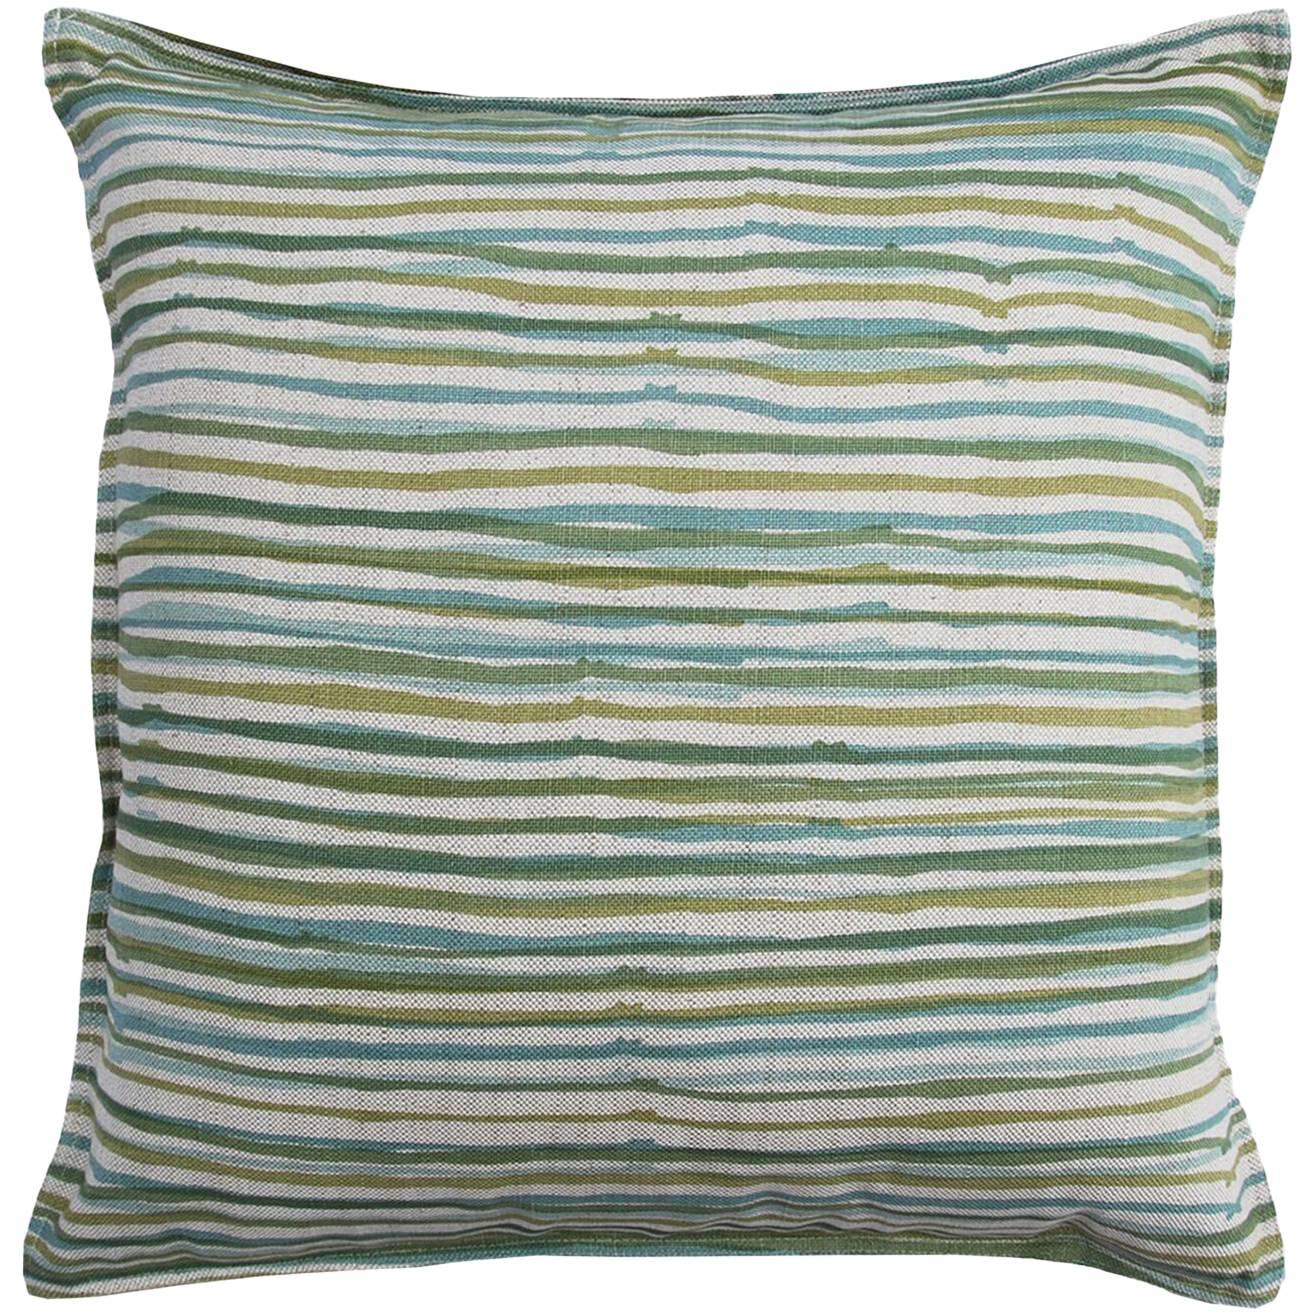 Vert Stripe on Wheat Cotton Linen Pillow For Sale